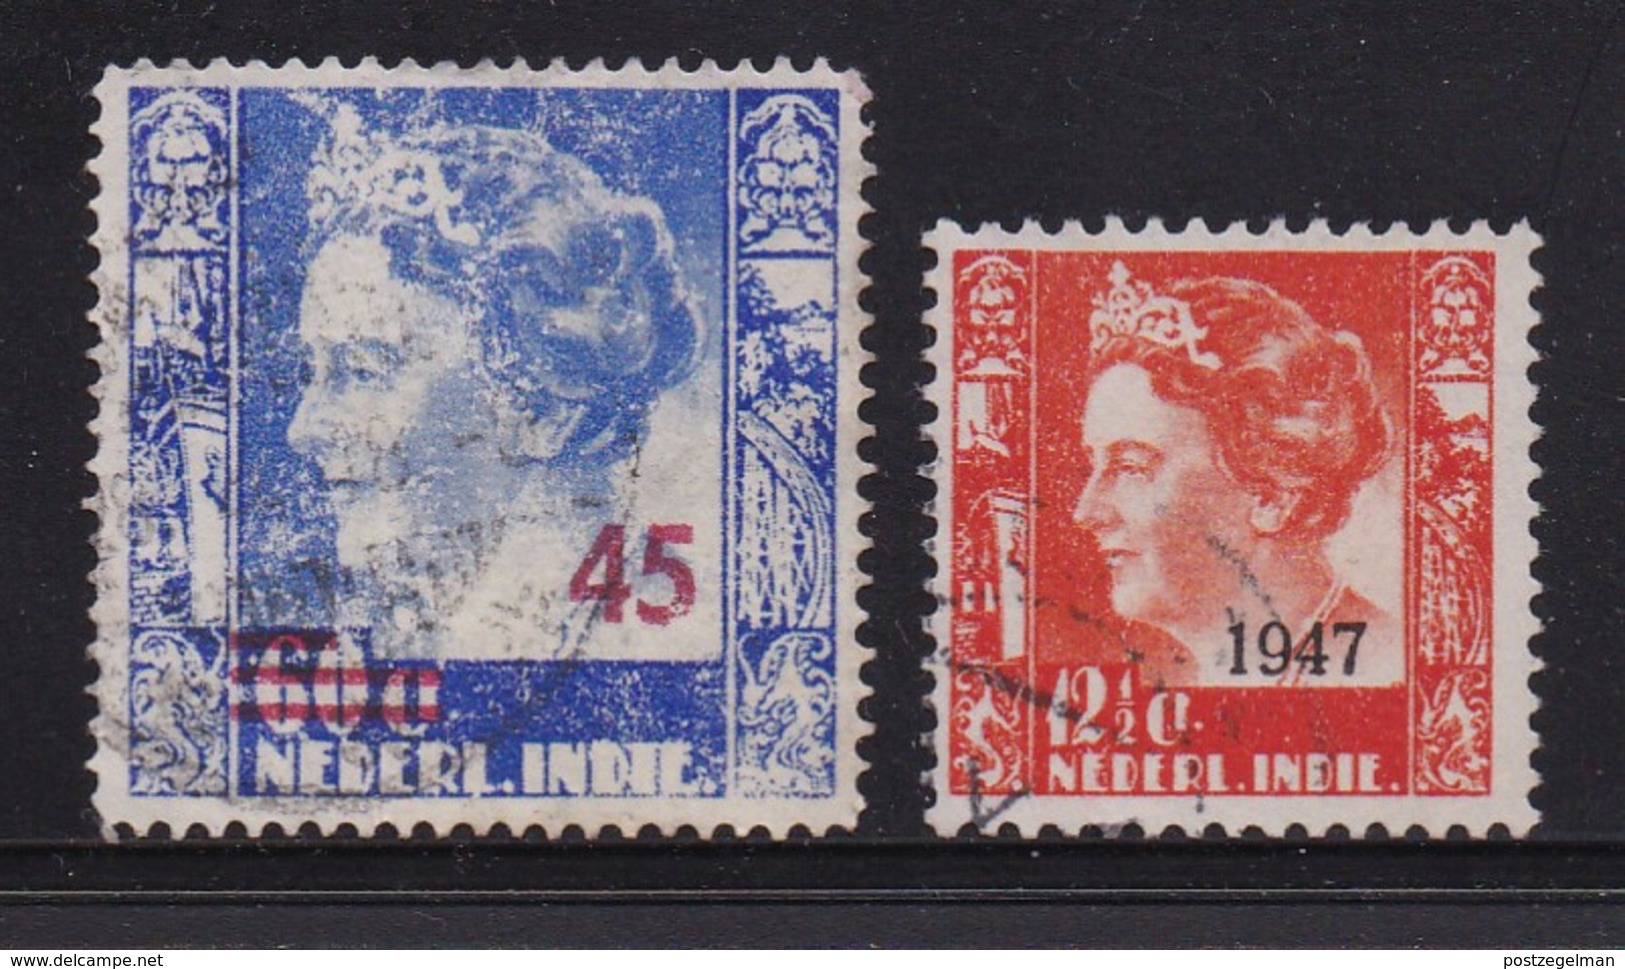 NETHERLAND-INDIES, 1947, Used Stamp(s), Queen Wilhelmina, NVPH 324, Scannr. 5407, 2 Values Only - Netherlands Indies